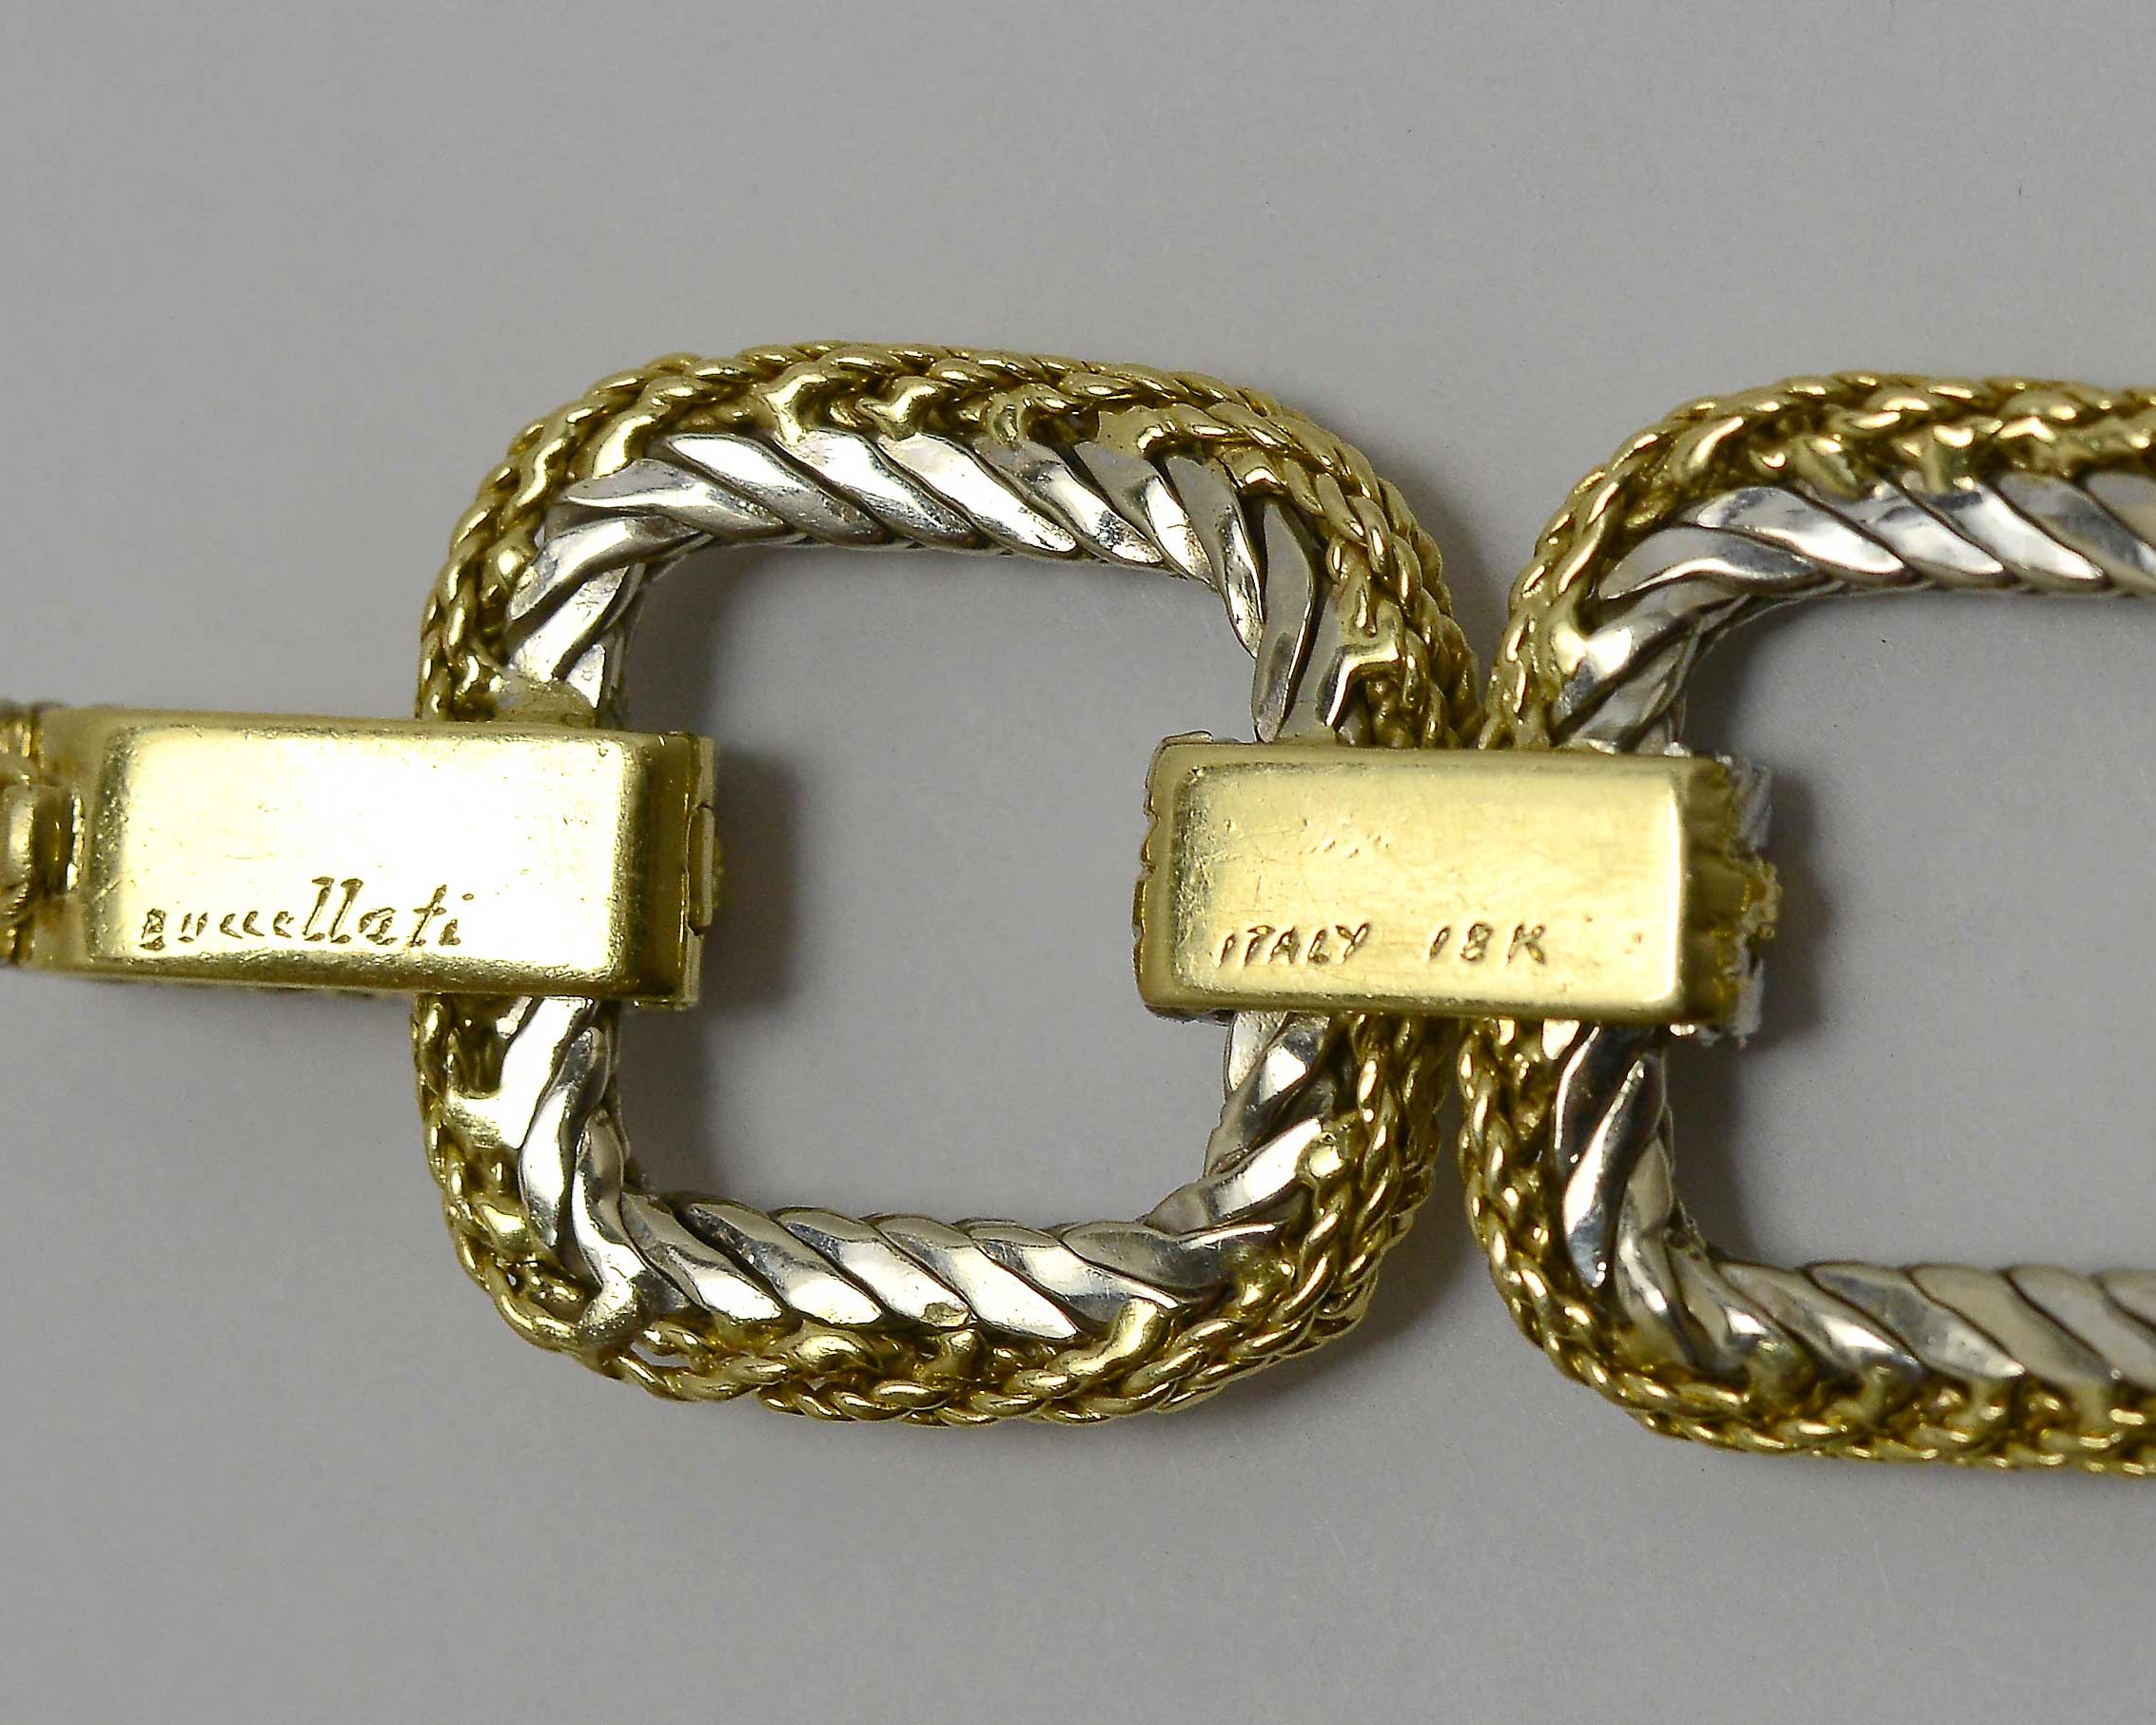 A buccellati Italy 18k hallmark engraved on a gold bracelet.